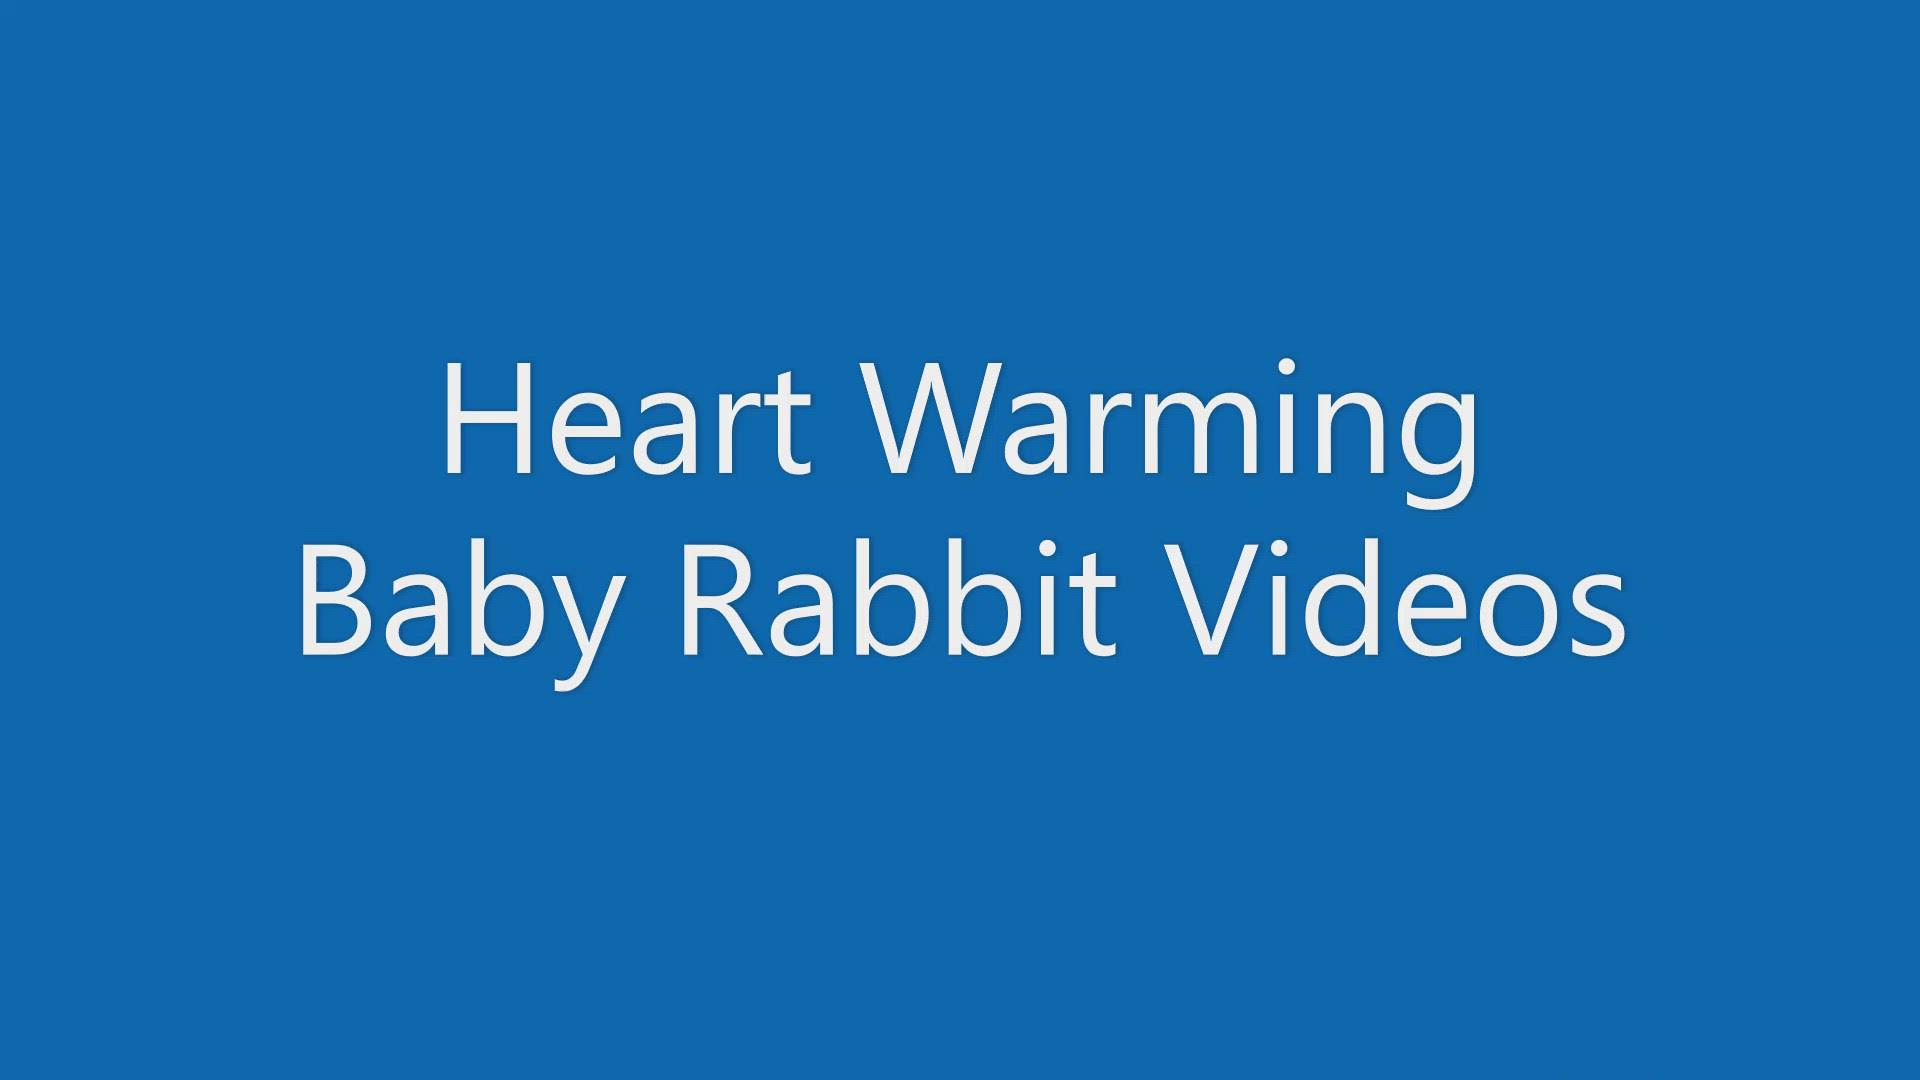 'Video thumbnail for Heart Warming Rabbit Videos'